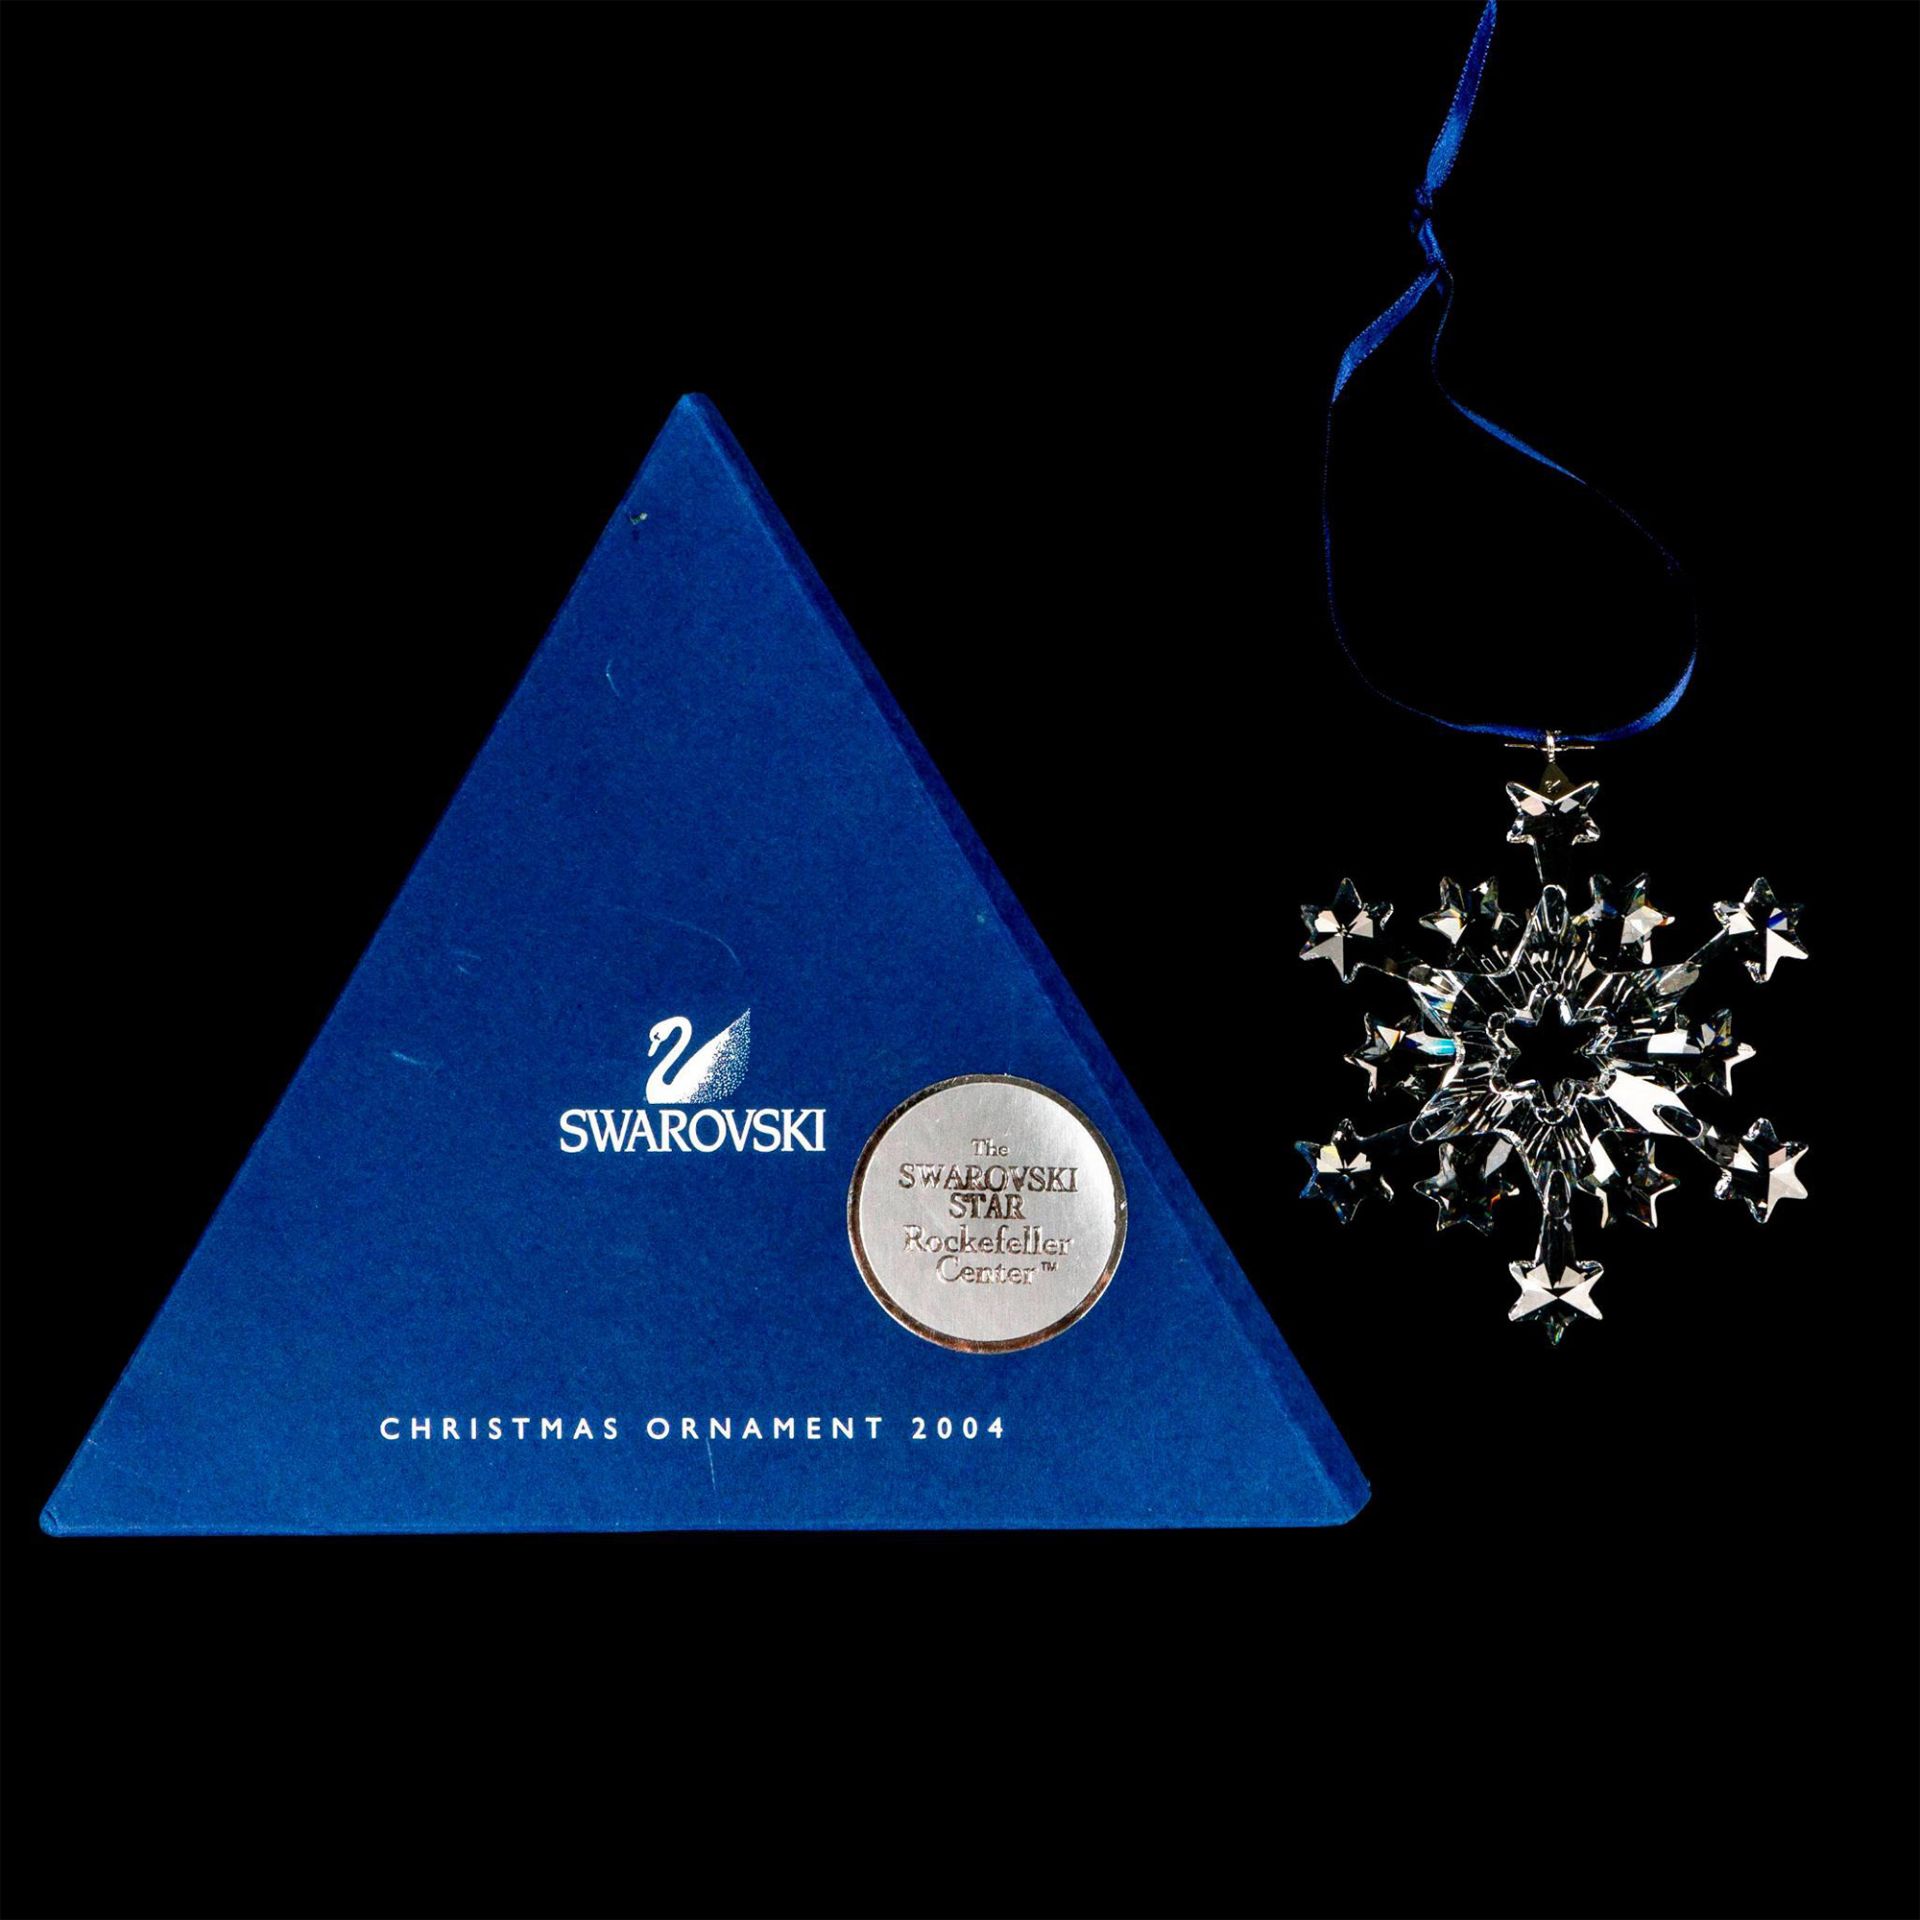 Swarovski Crystal Holiday Ornament 2004 - Image 2 of 2